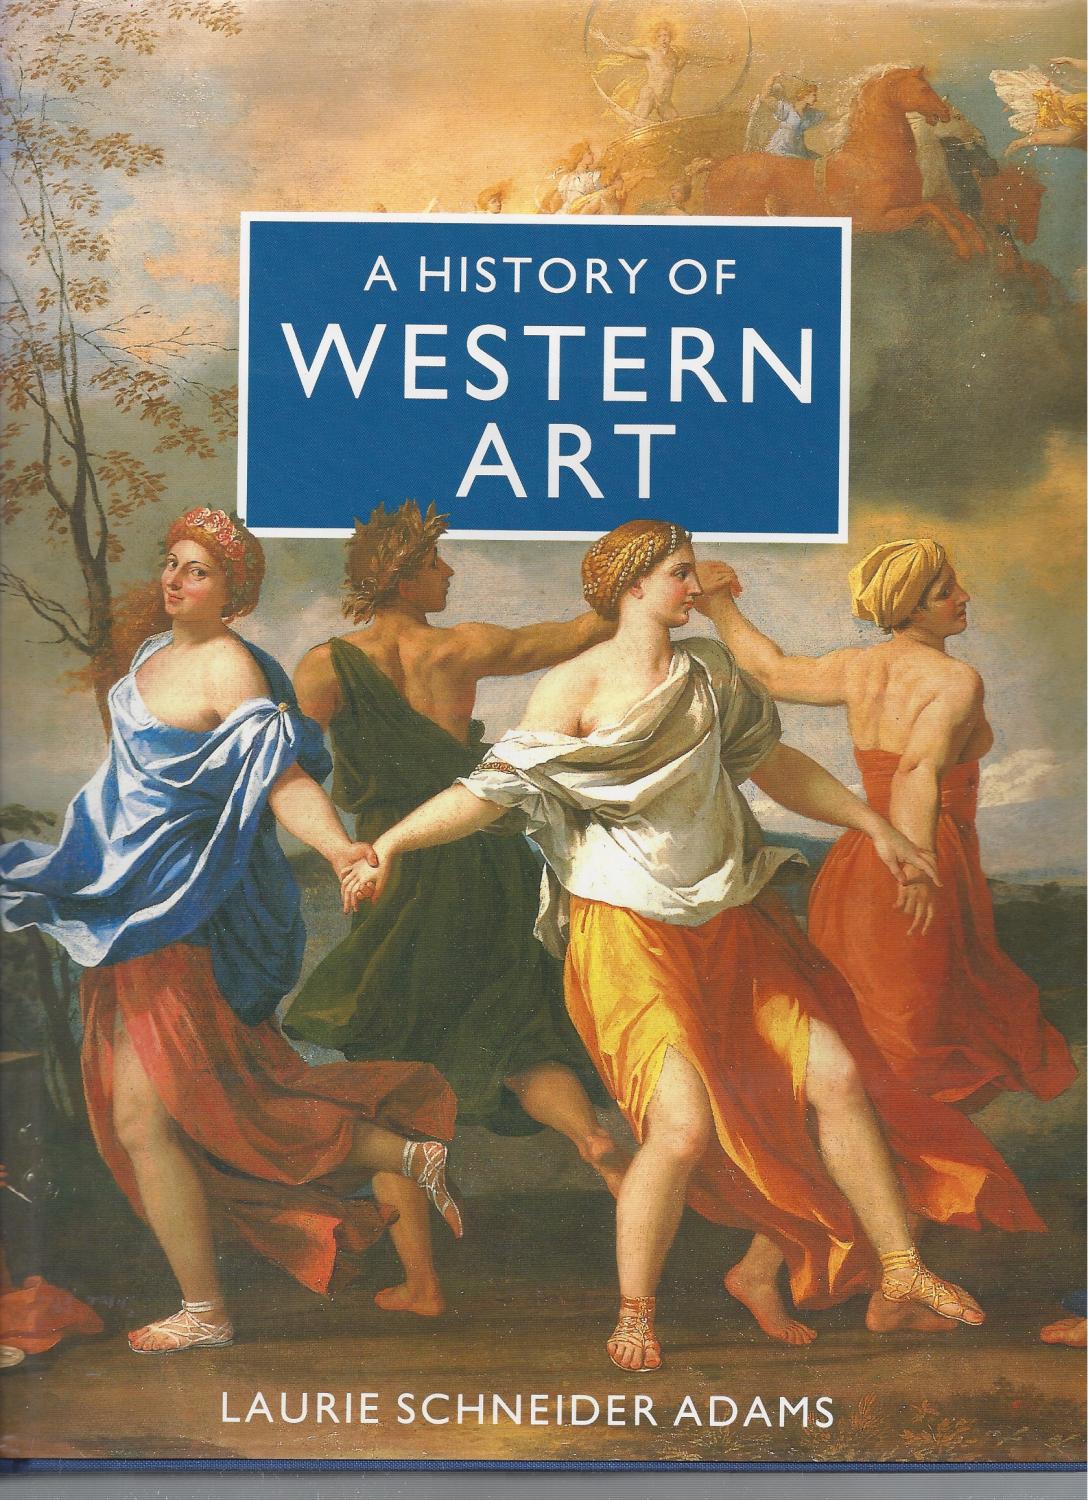 western art history essay